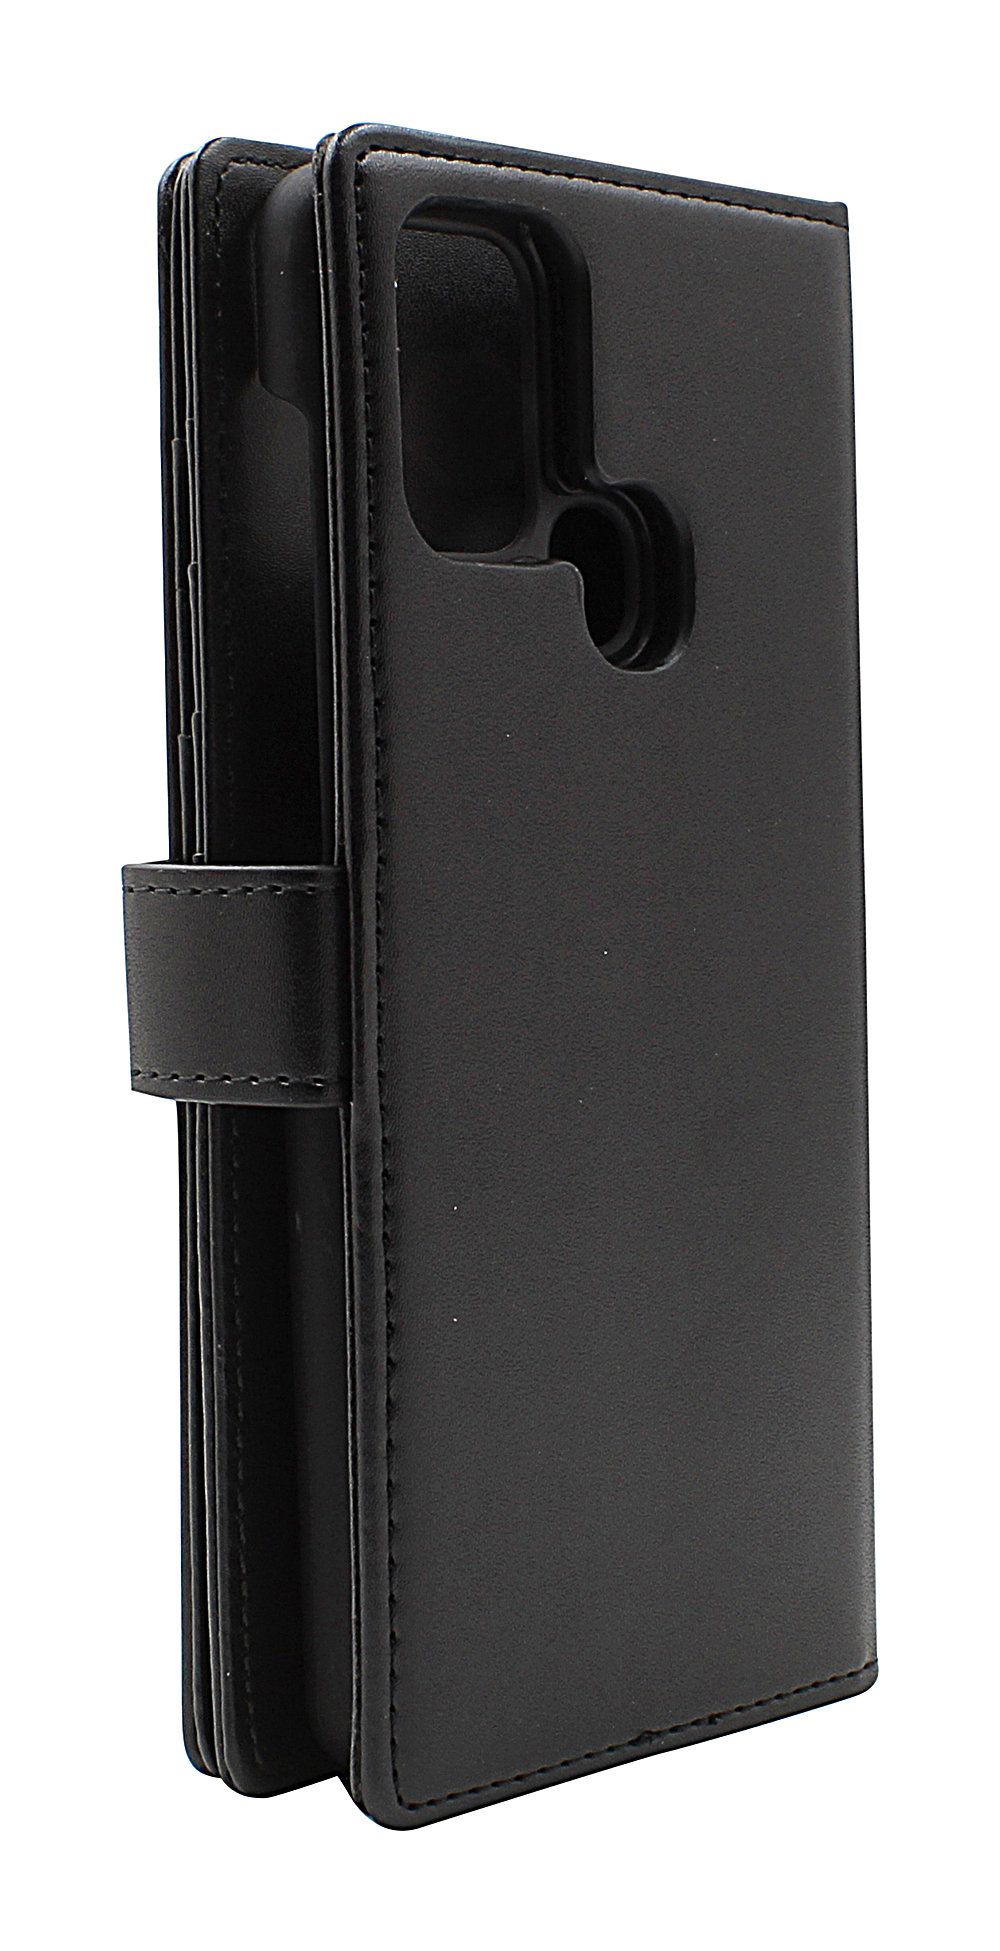 CoverInSkimblocker XL Magnet Fodral Samsung Galaxy A21s (A217F/DS)